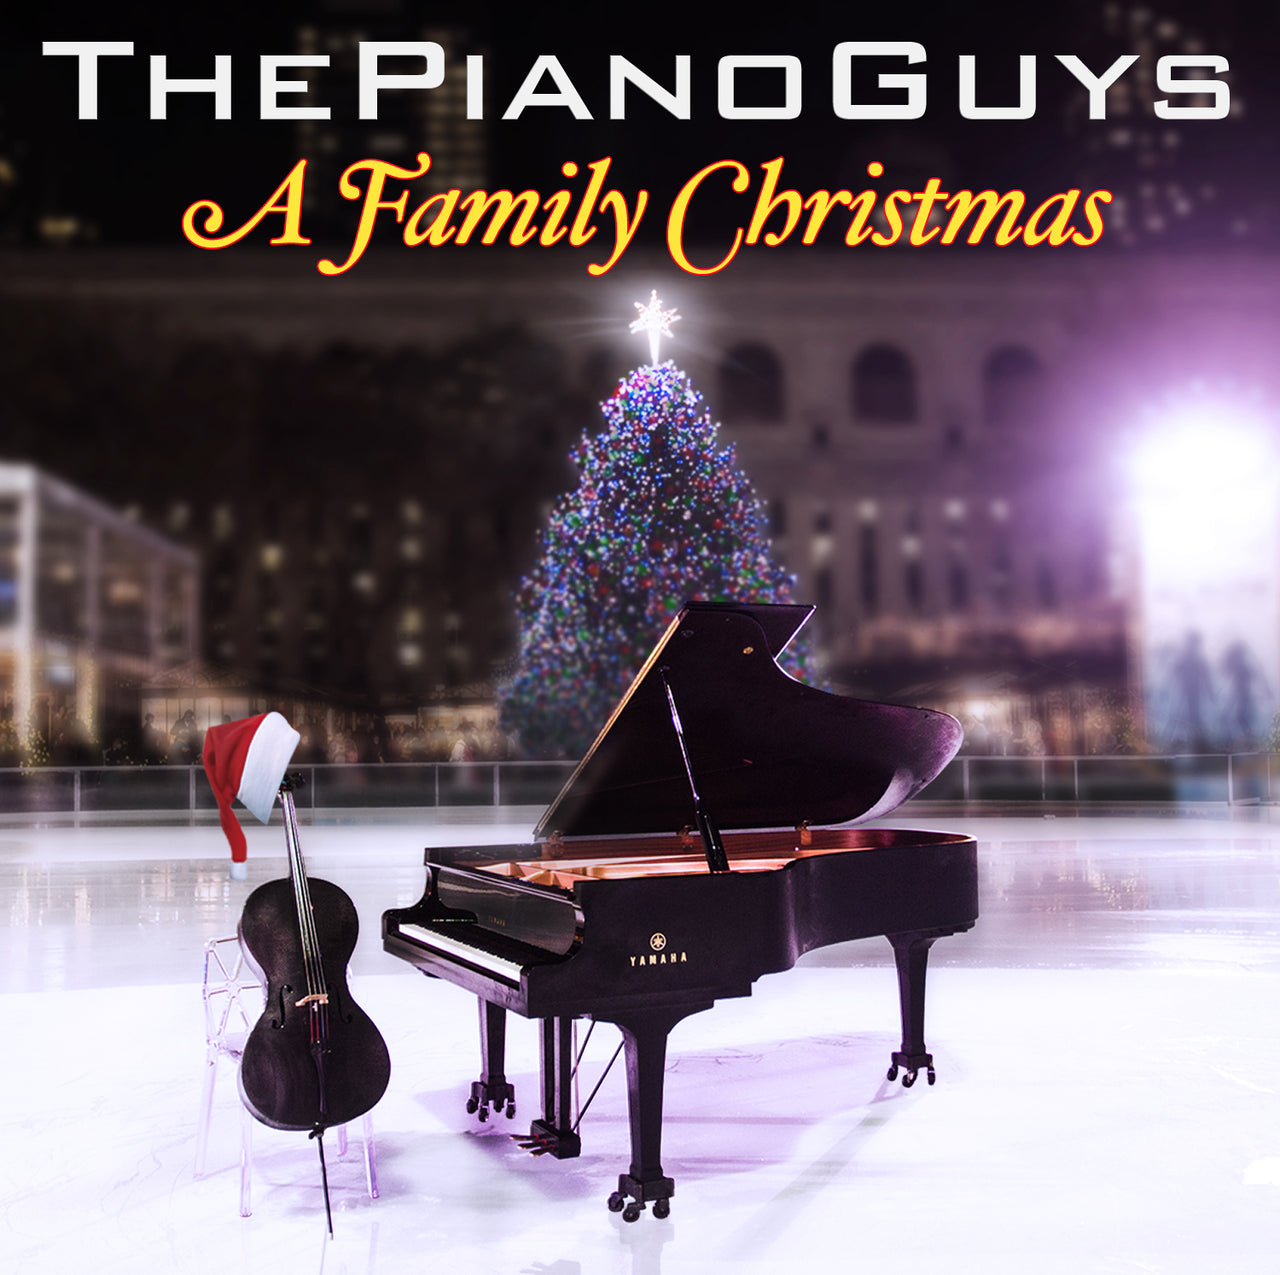 The Piano Guys "A Family Christmas"